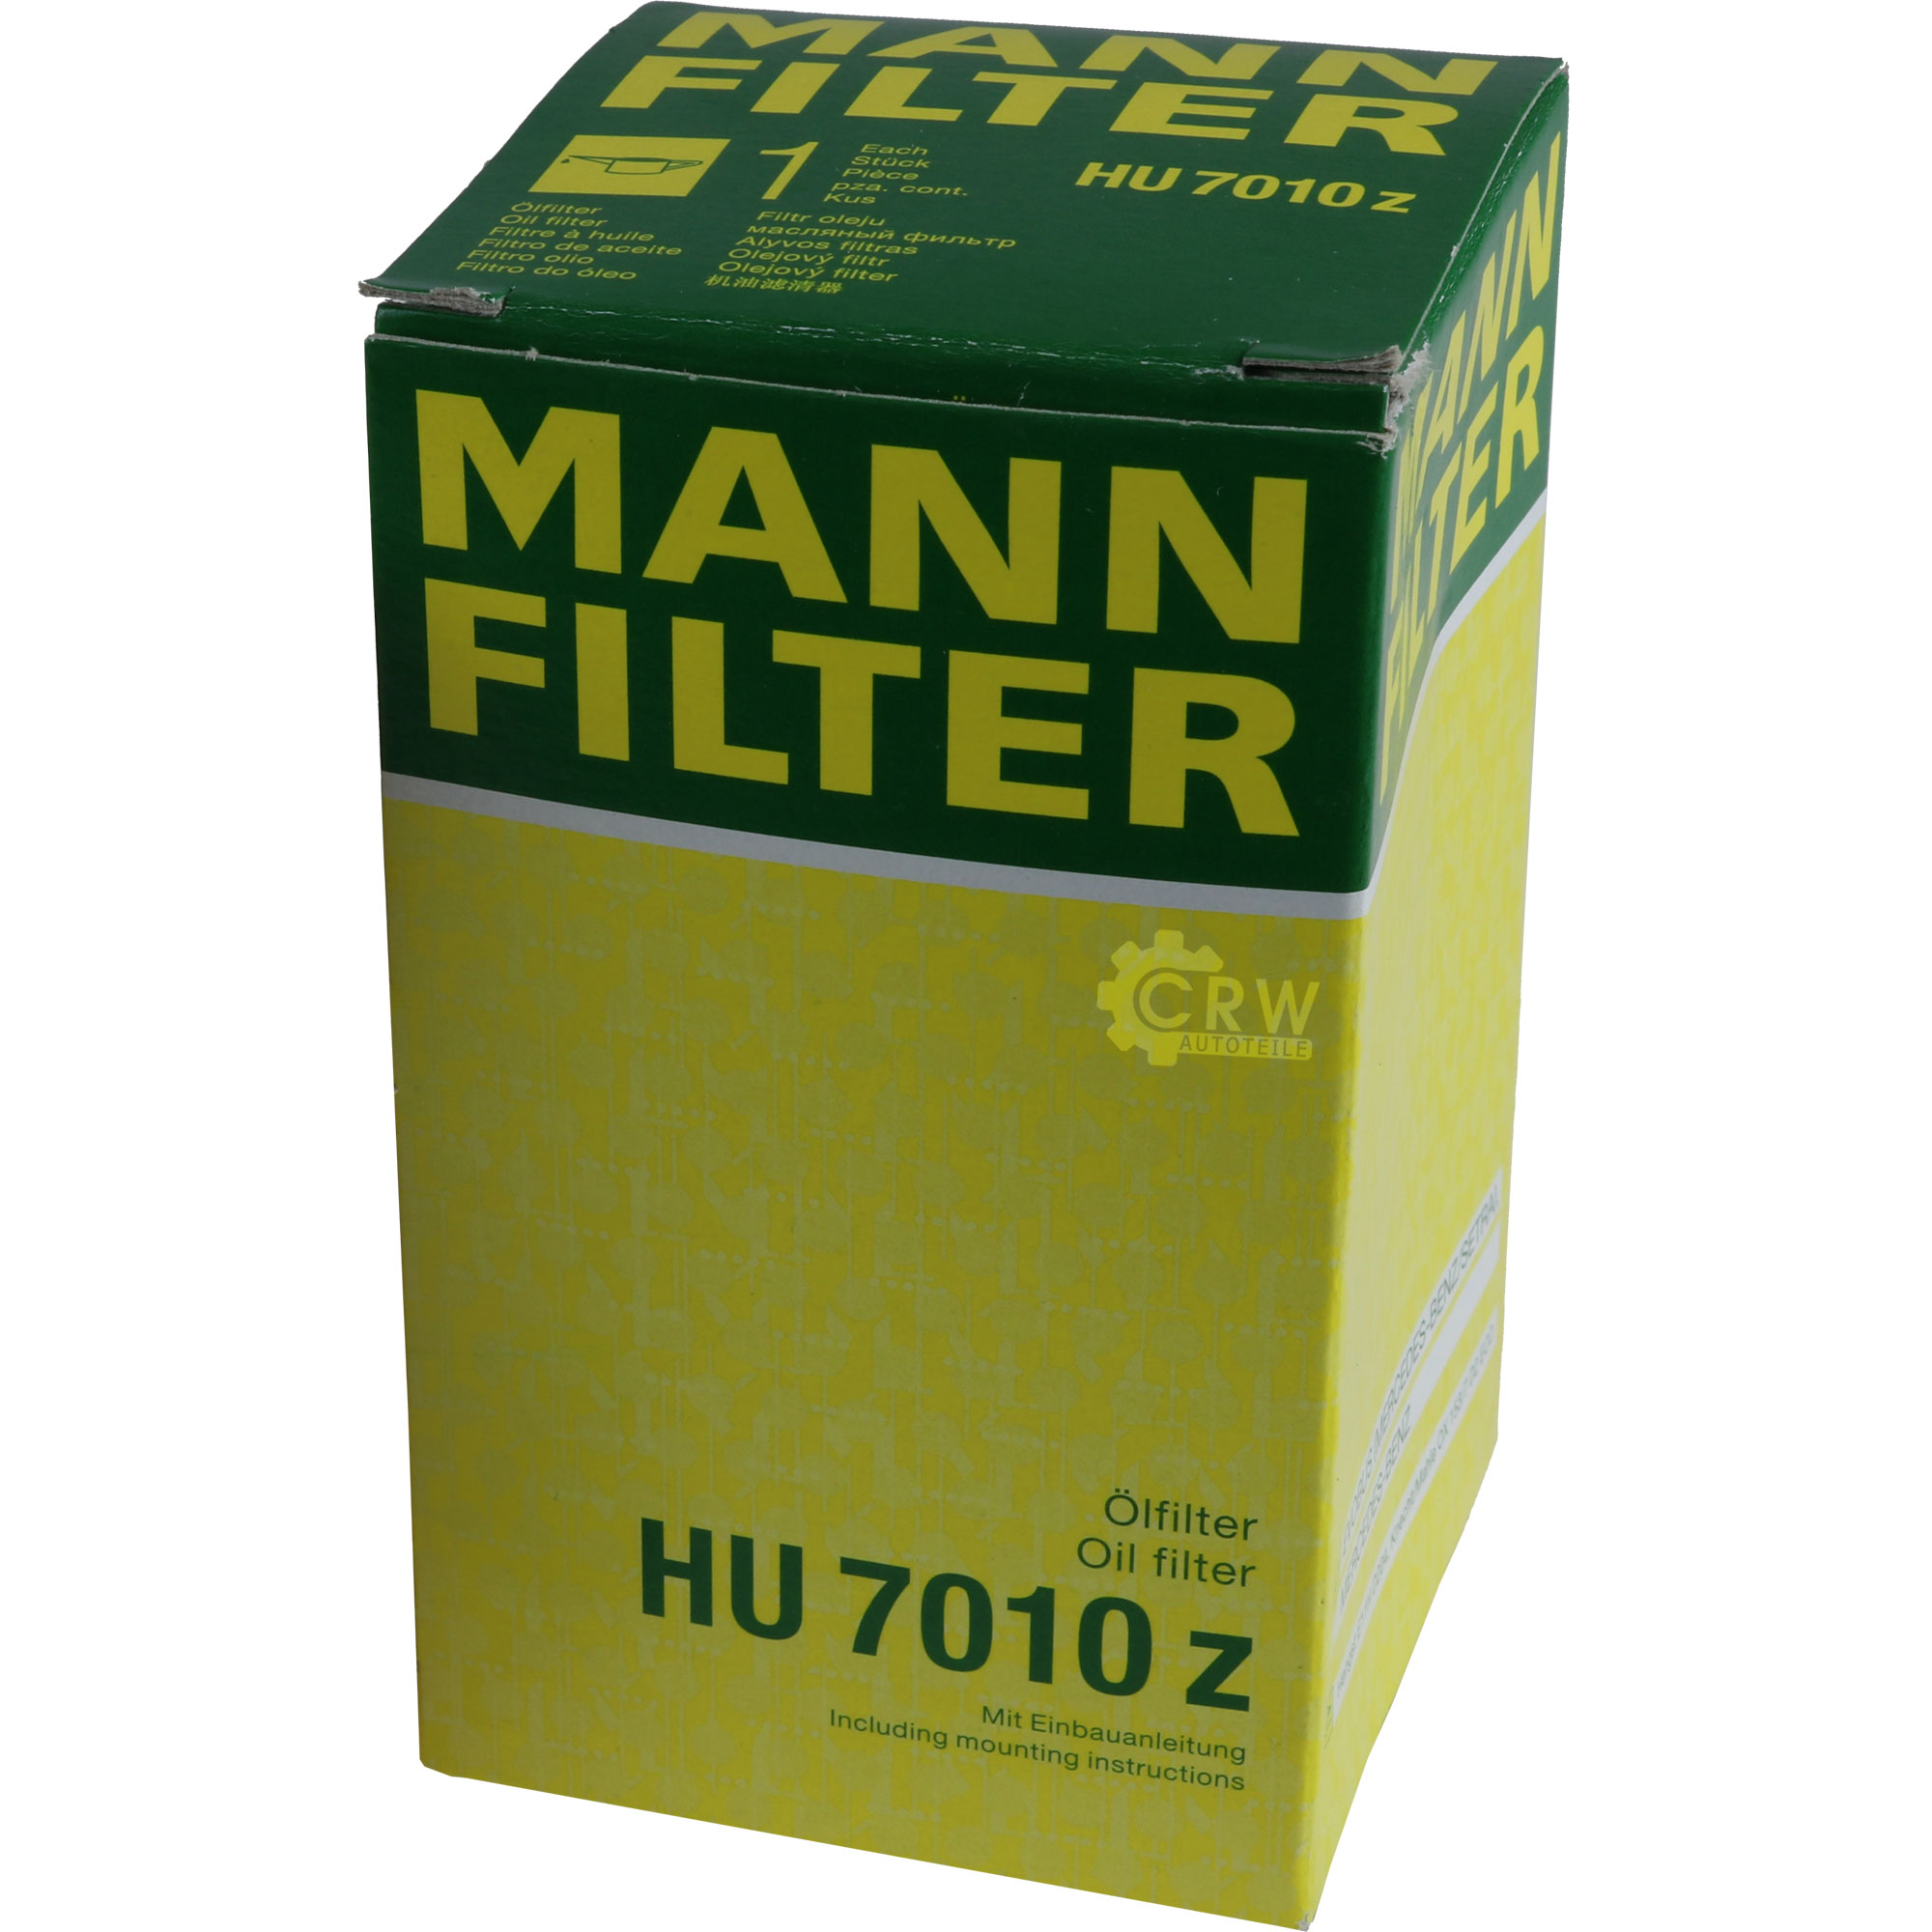 MANN-FILTER Ölfilter HU 7010 z Oil Filter